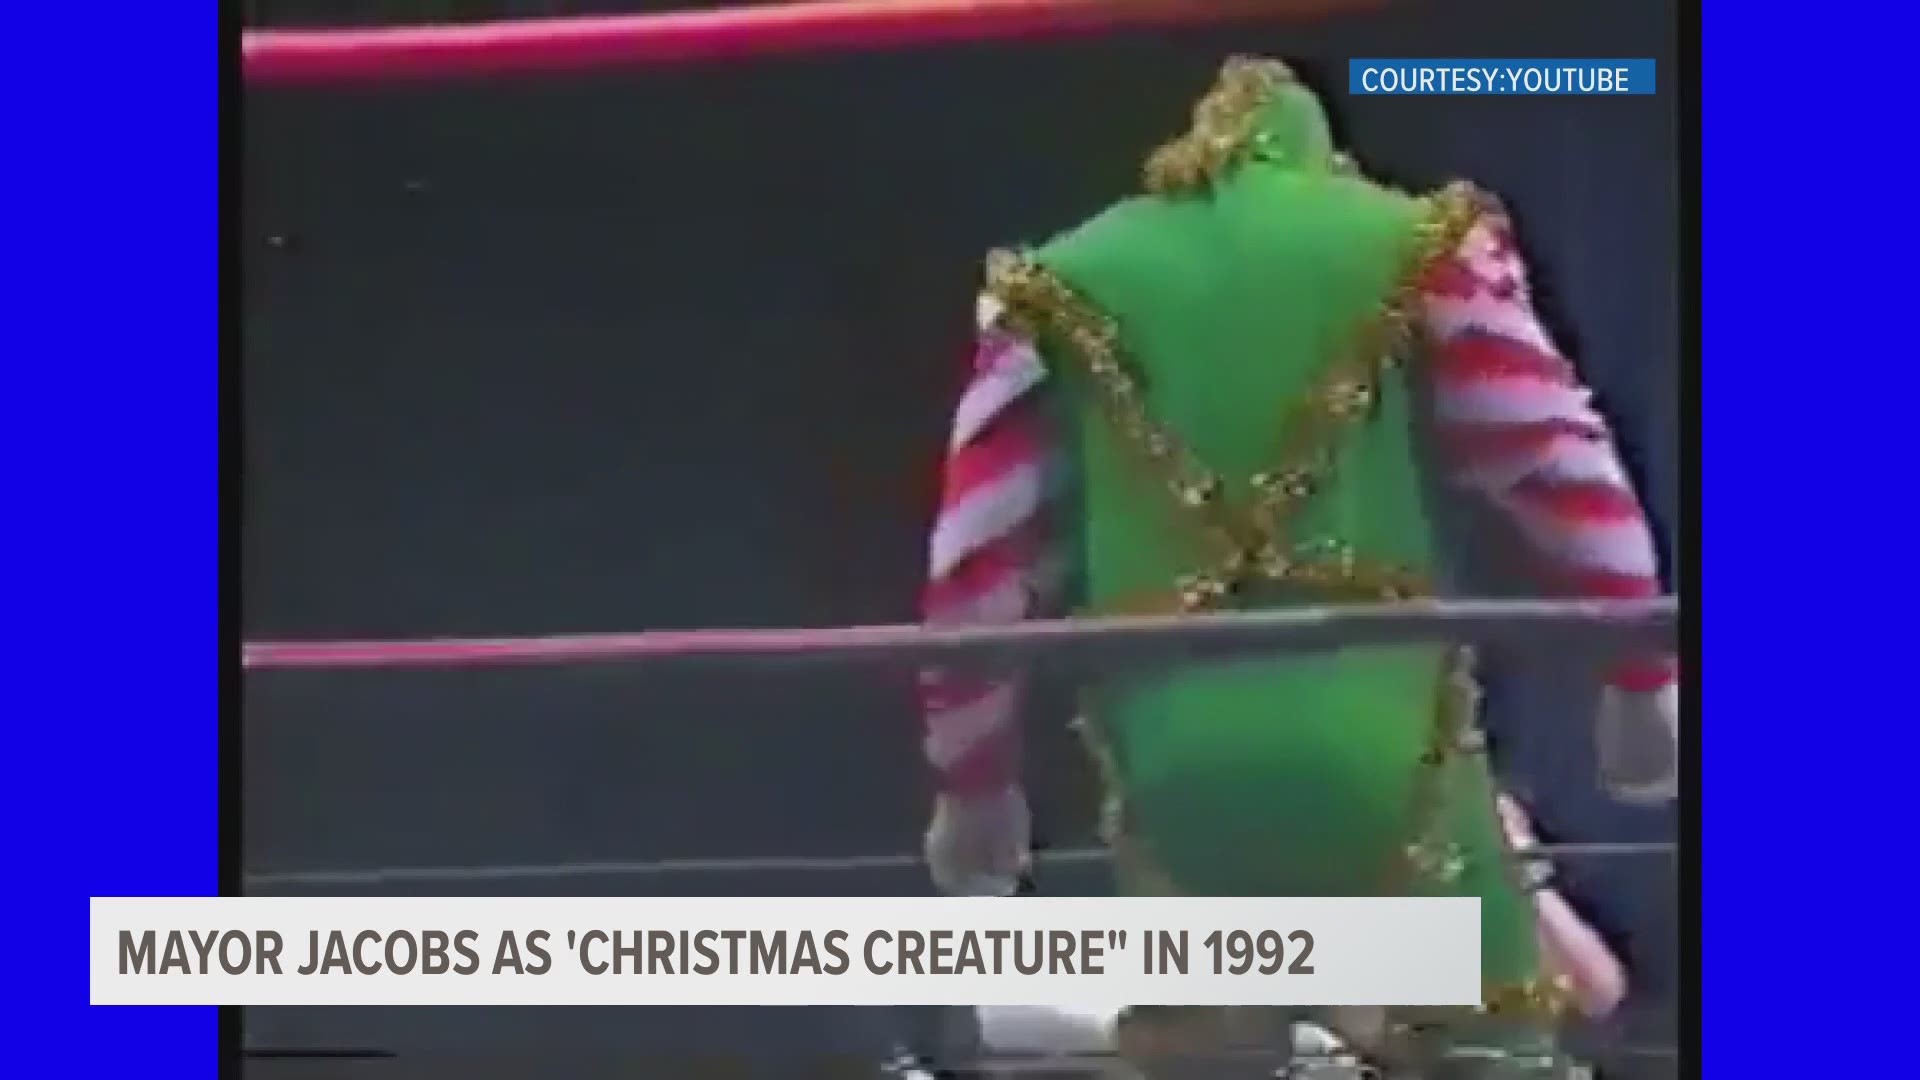 That 'Christmas Creature' is Knox County Mayor Glenn Jacobs.